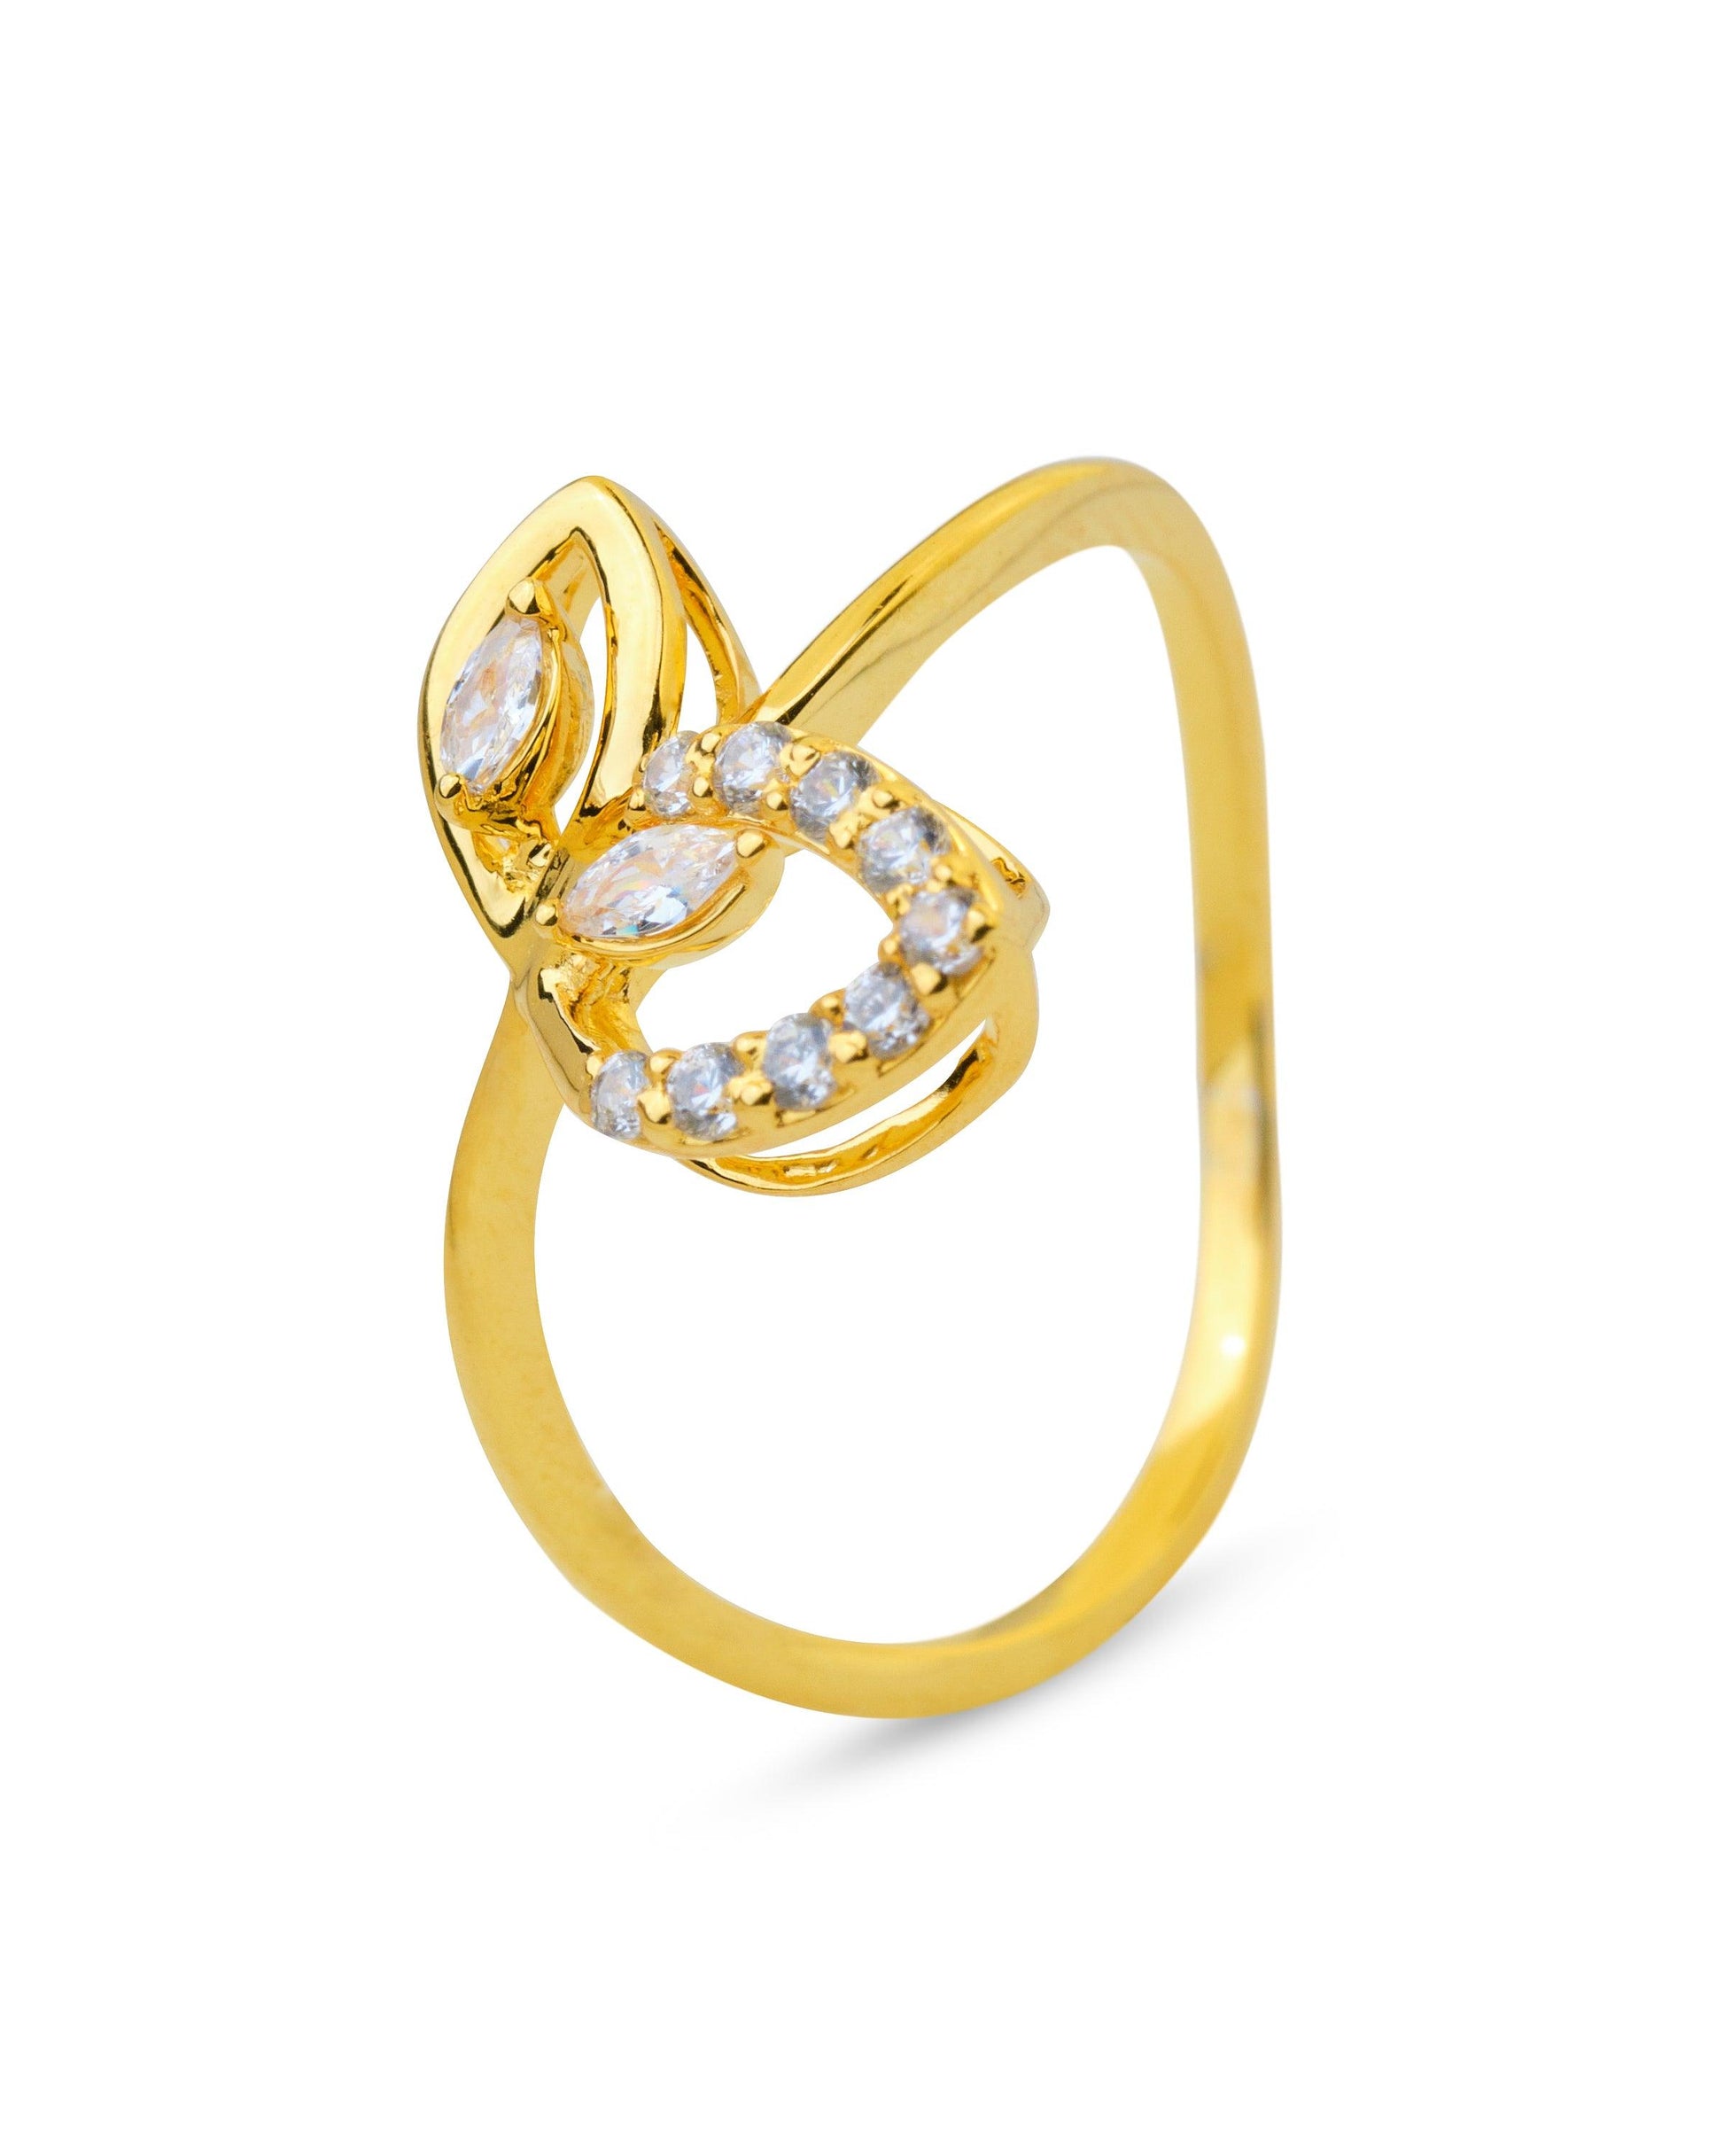 Gleamig Gold & Diamond Ring - Chandrani Pearls